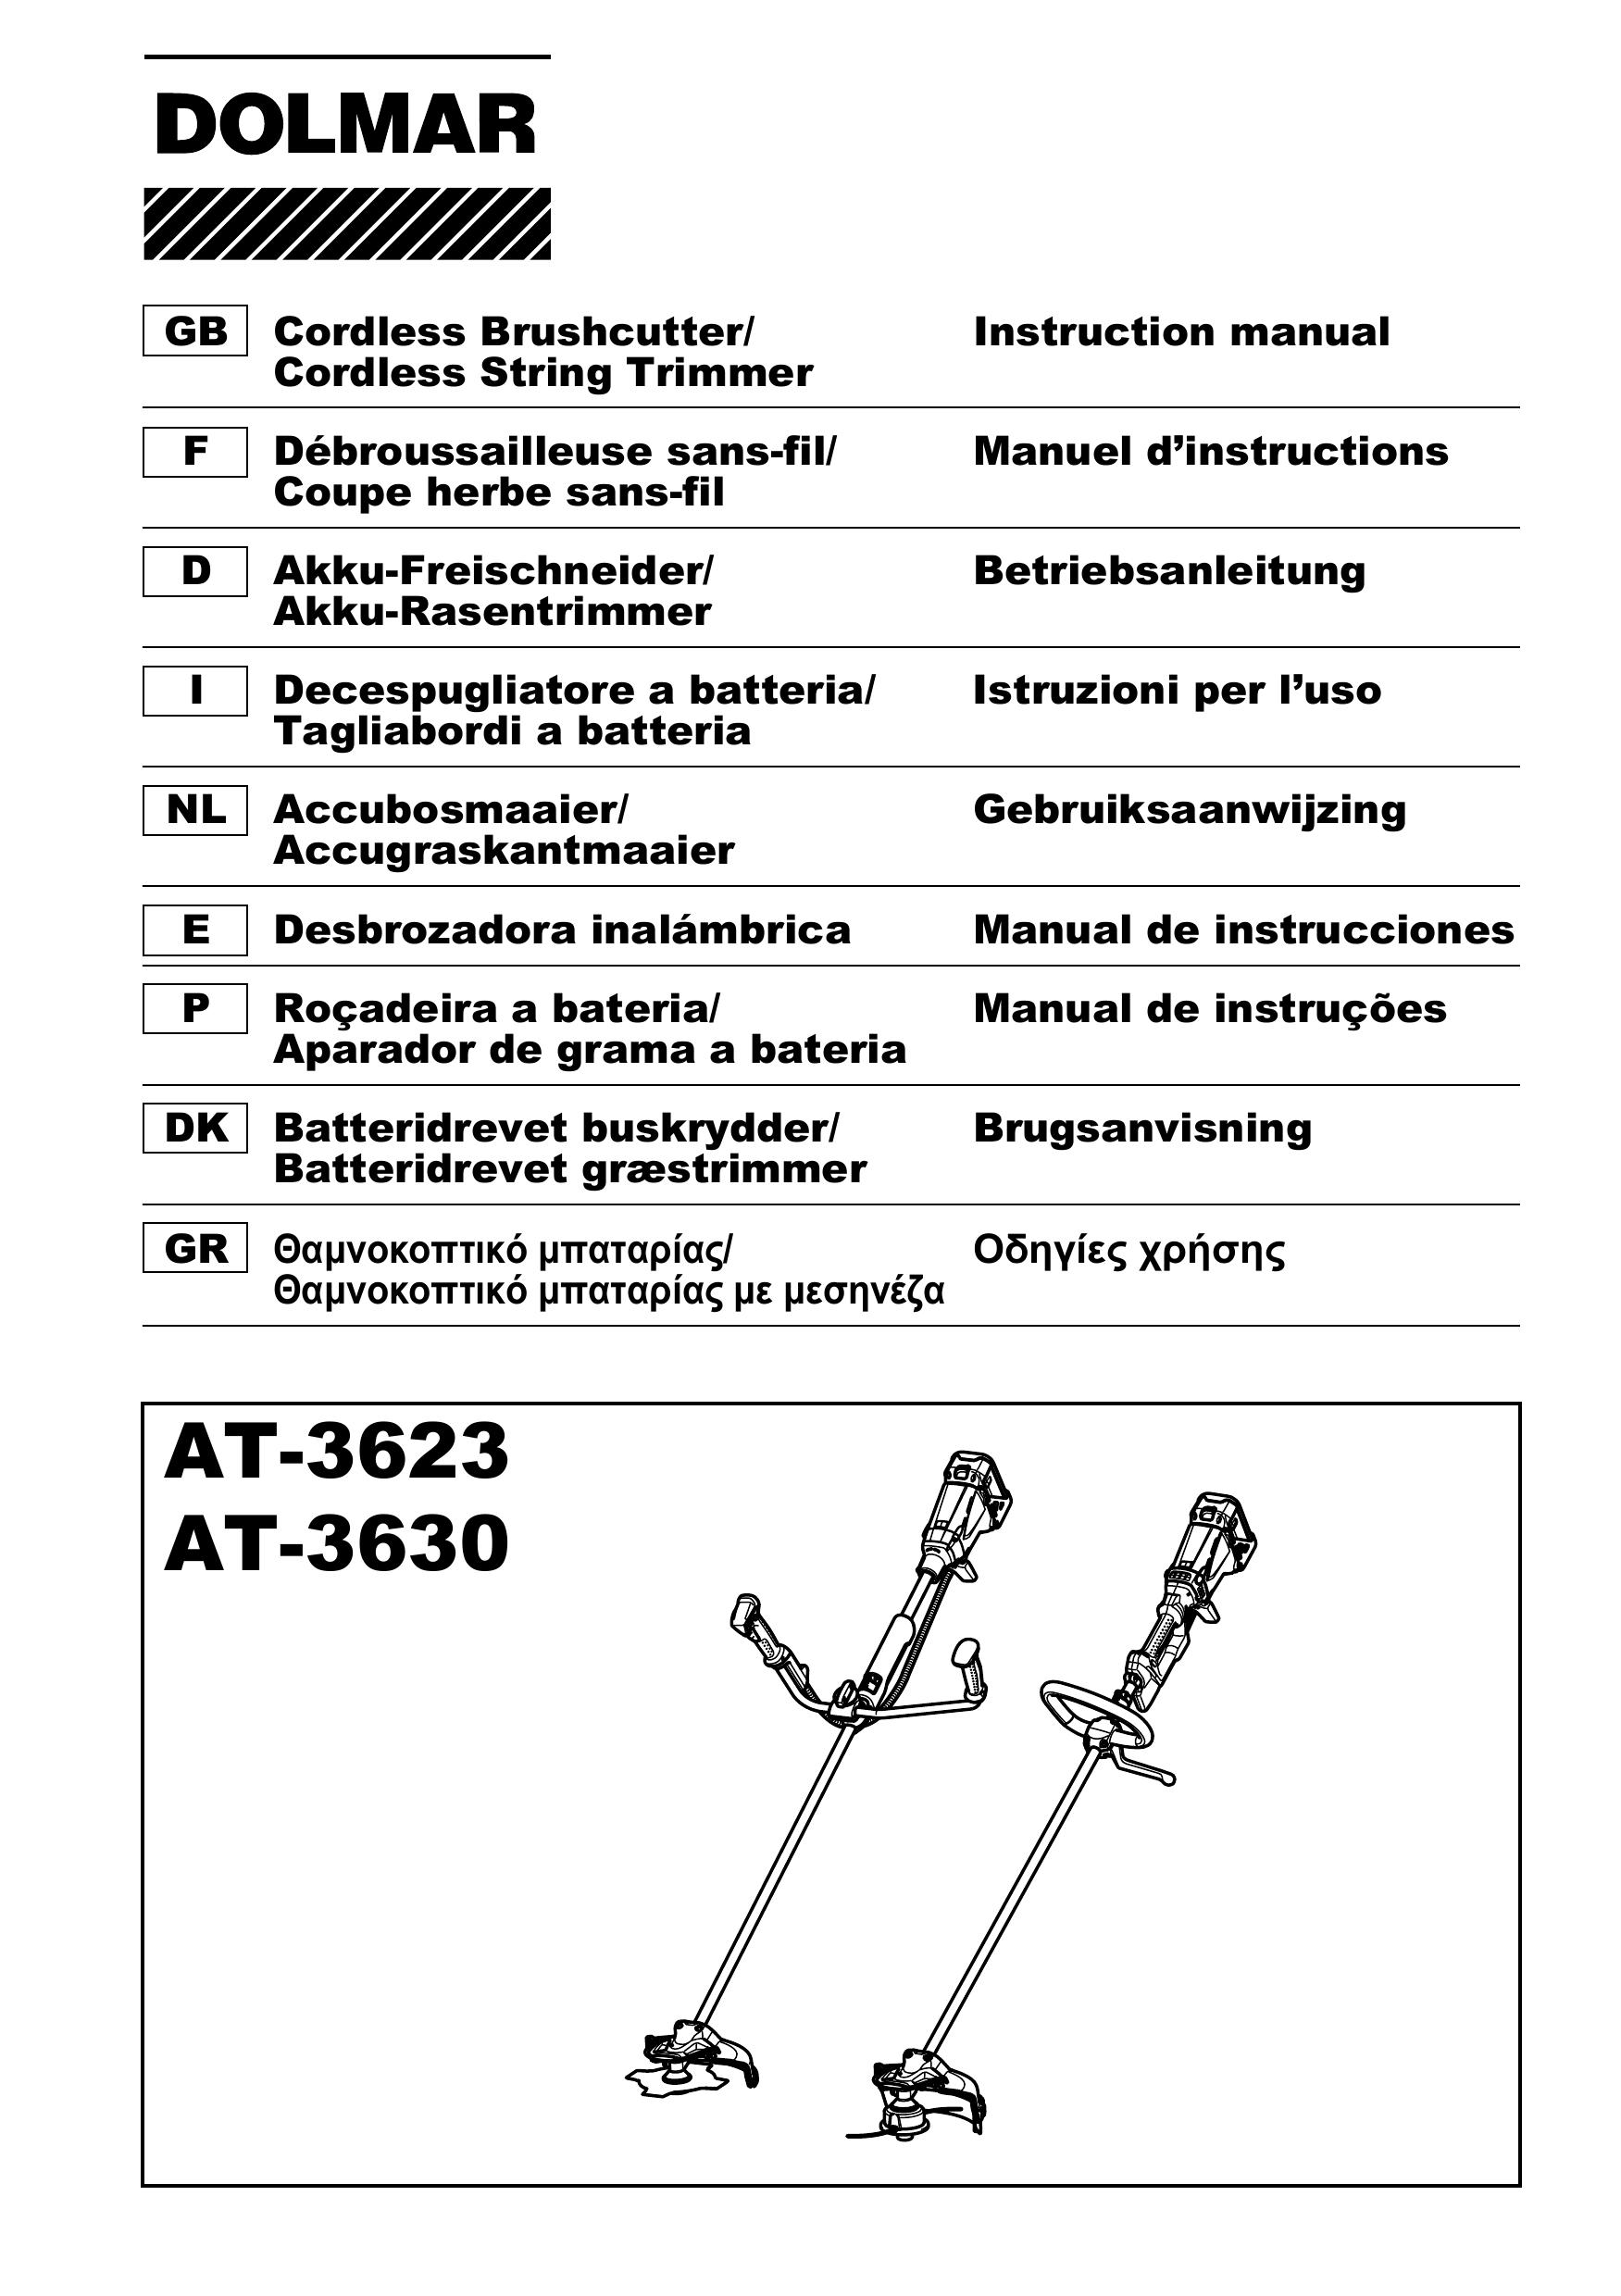 Dolmar AT-3630 Brush Cutter User Manual